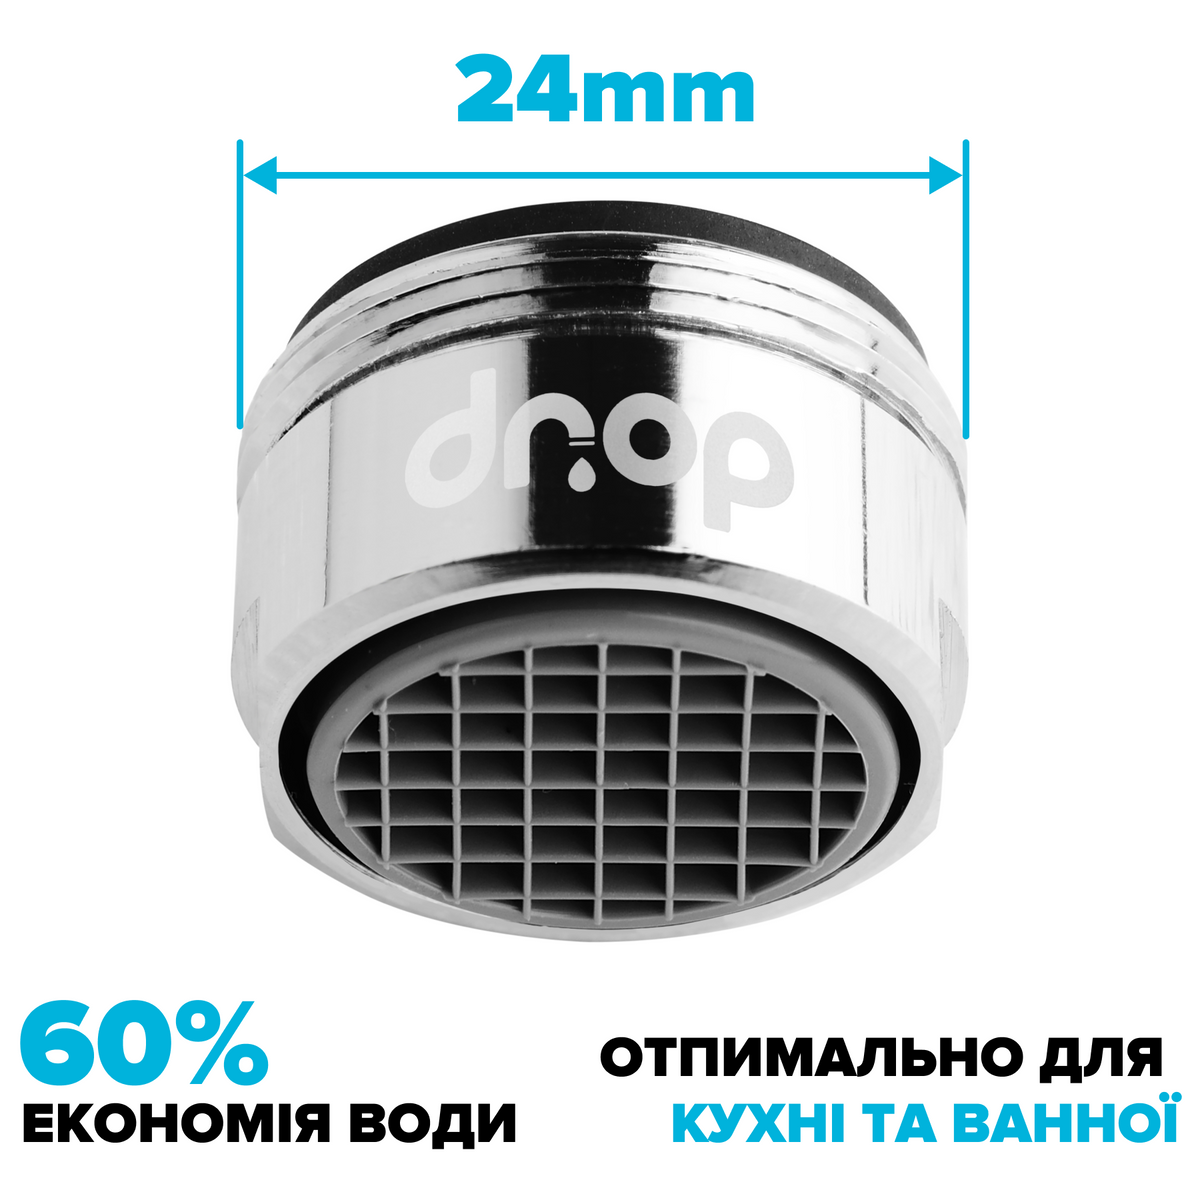 Водосберегающий аэратор для смесителя DROP PREMIUM PM05T-24 расход 5 л/мин внешняя резьба 24 мм